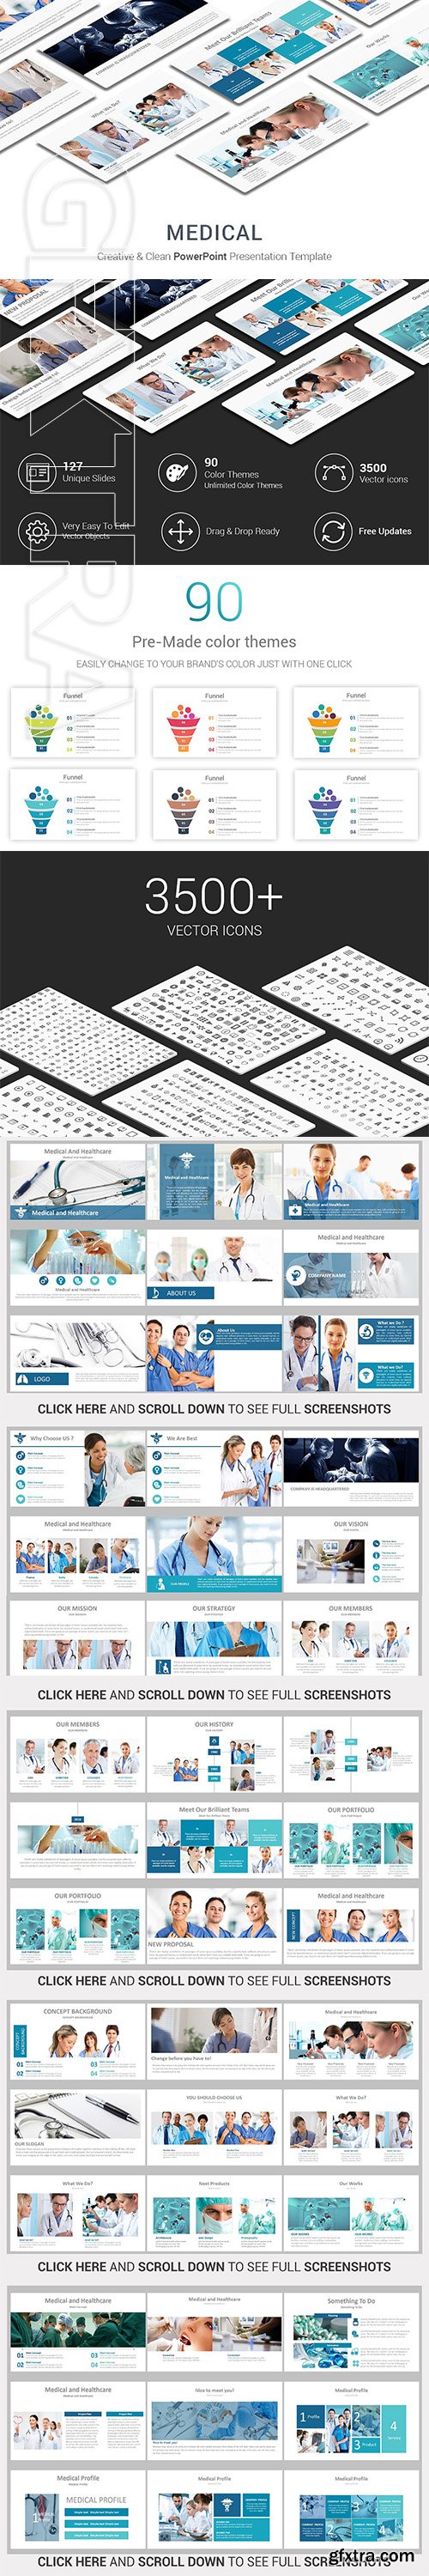 CreativeMarket - Medical PowerPoint Template 2977751